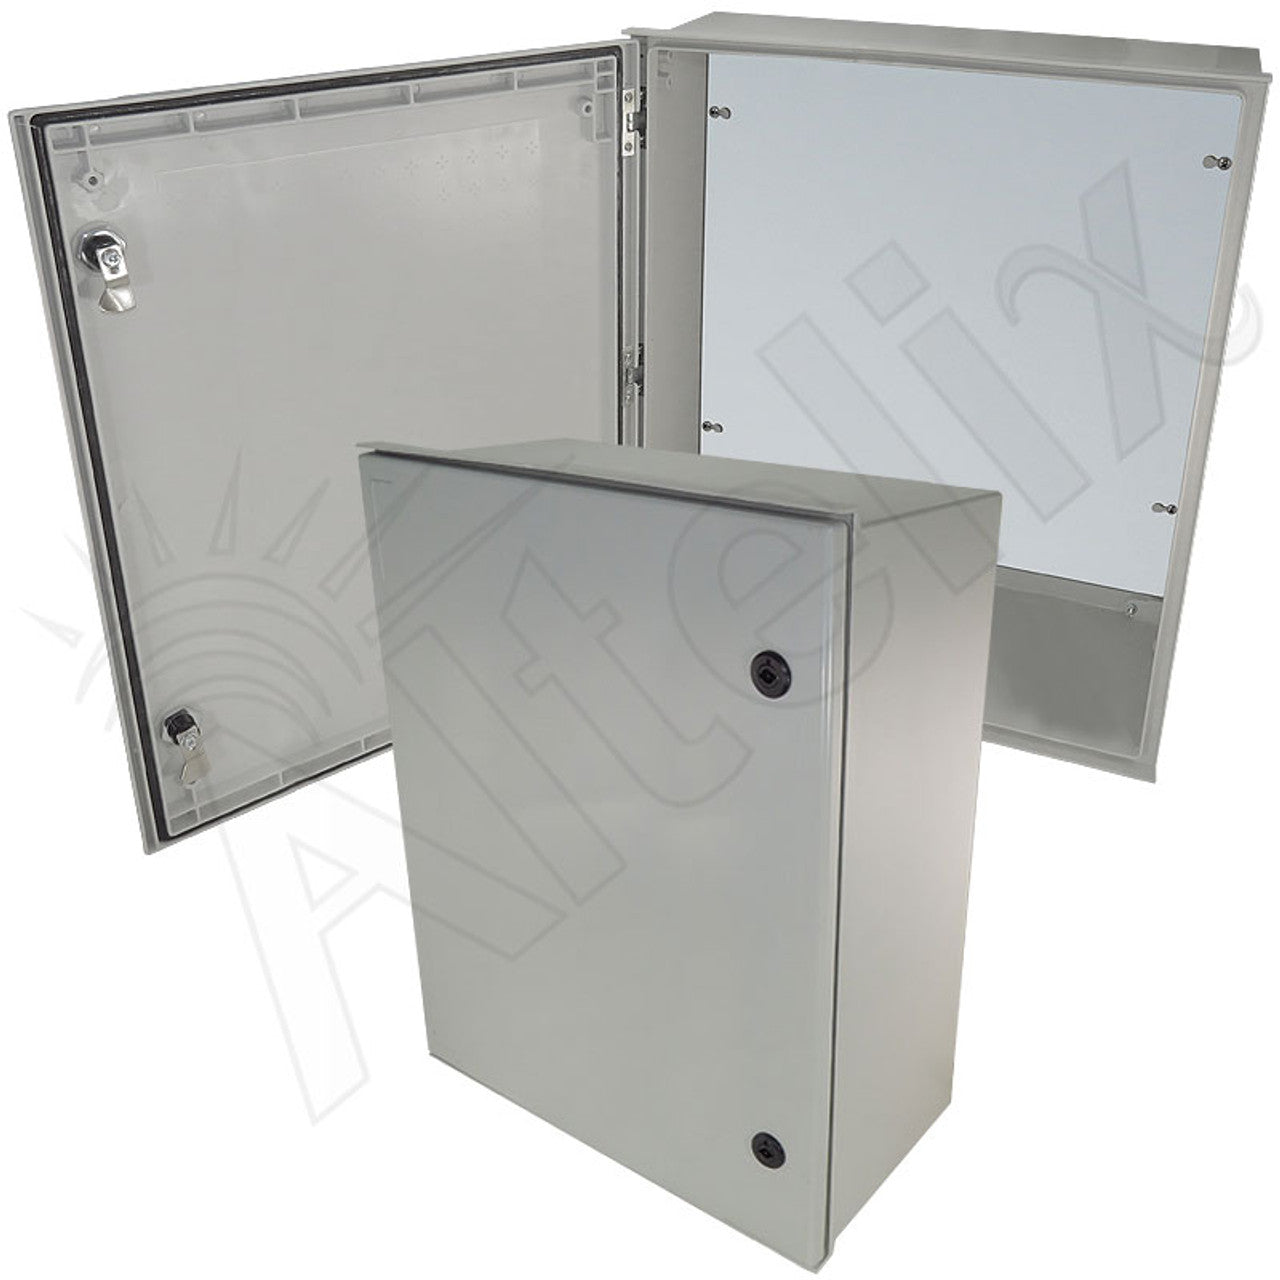 Altelix NEMA 3X Fiberglass Indoor / Outdoor RF Transparent WiFi Access Point Enclosure with Non-Metallic Equipment Mounting Plate